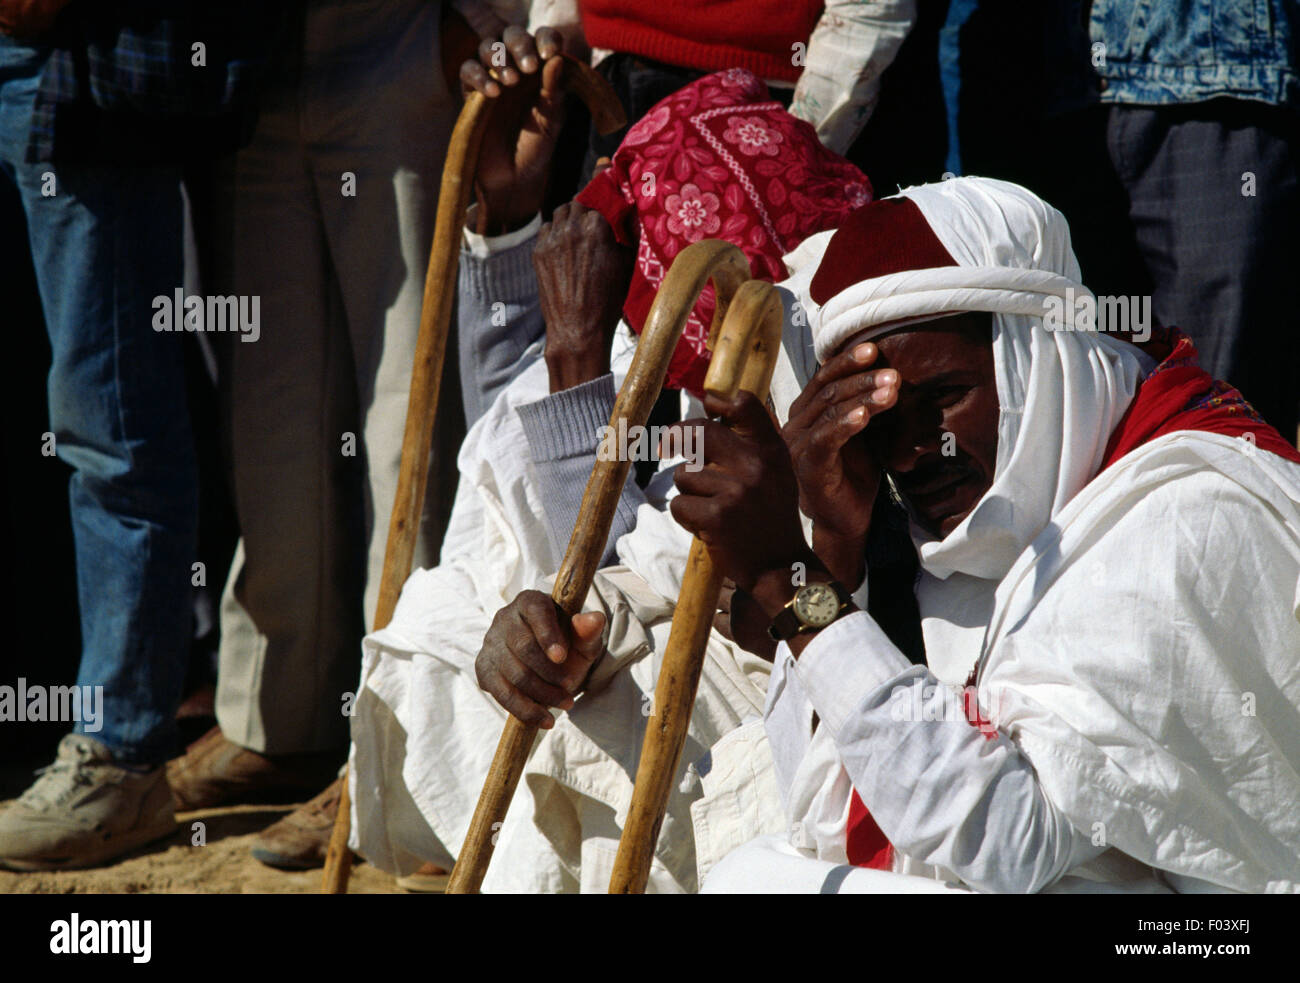 People in traditional clothes, Matmata Berber festival, Tunisia. Stock Photo